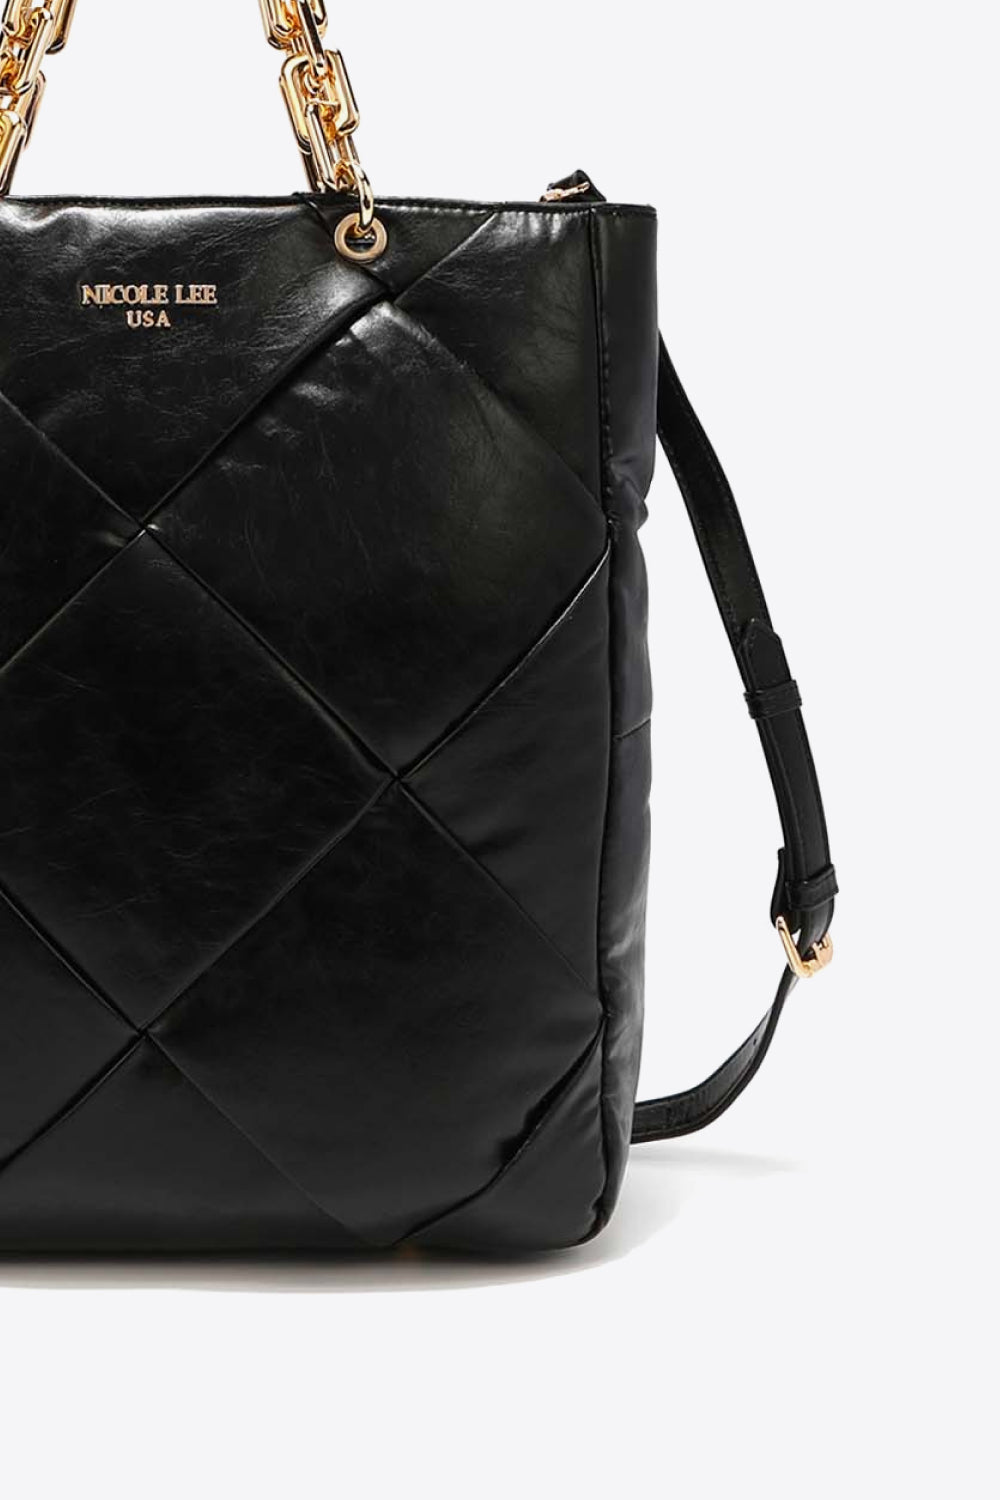 Nicole Lee USA Mesmerize Handbag COCO CRESS